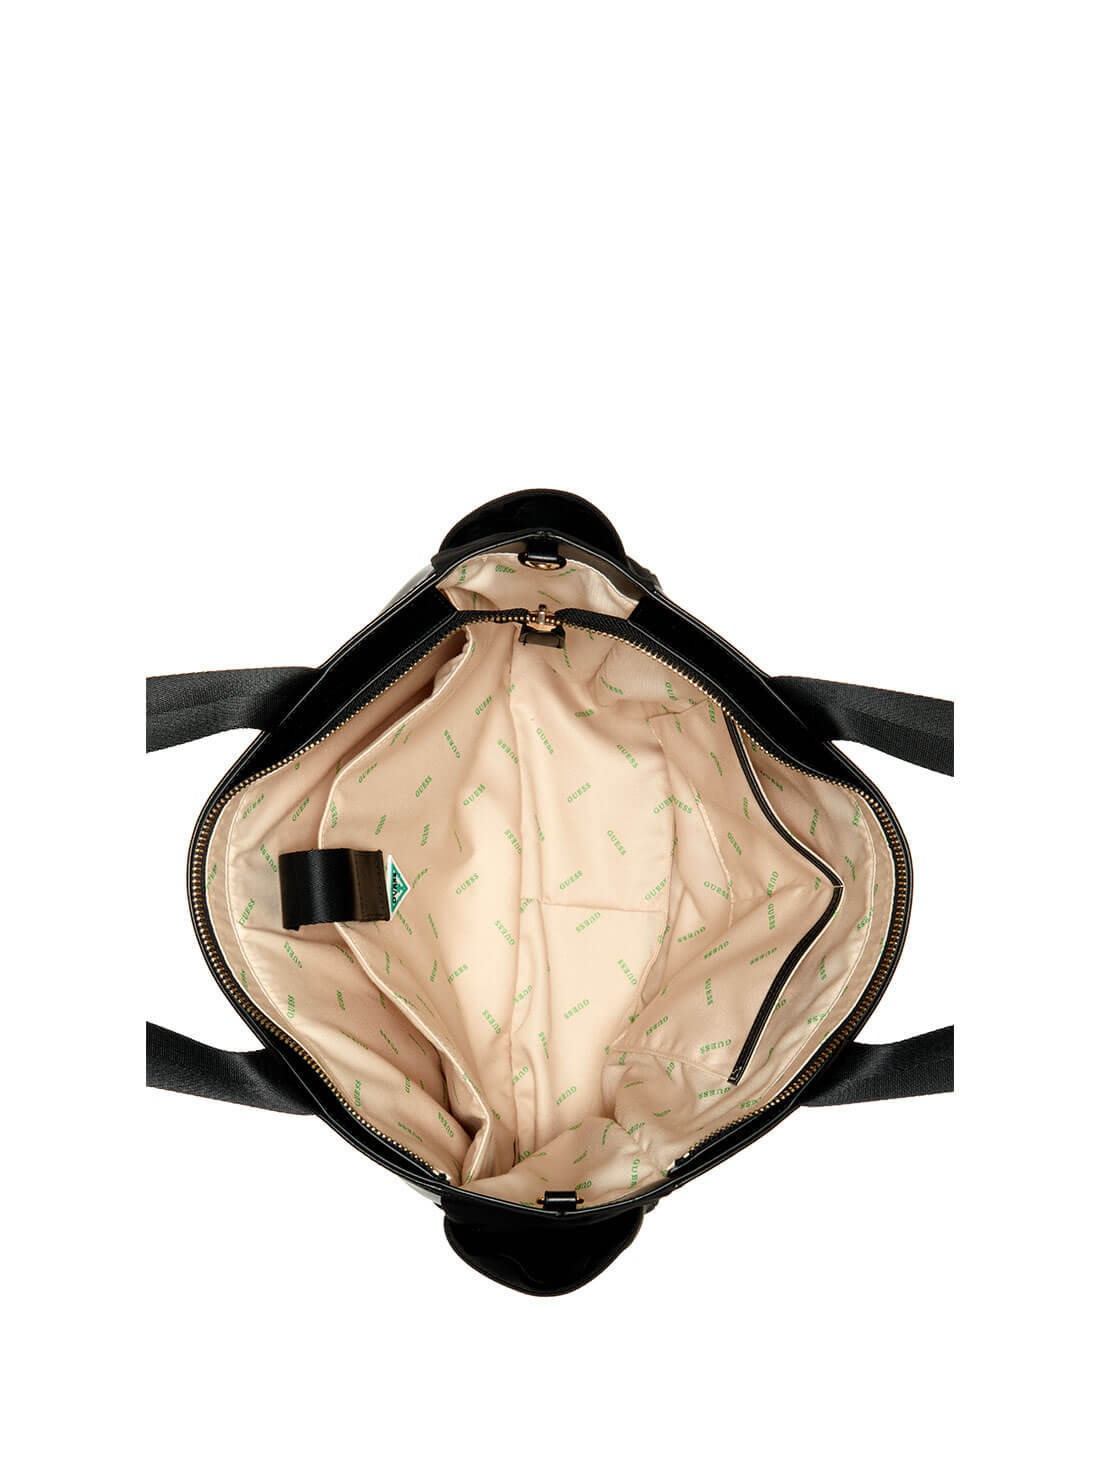 Eco Black Gemma Travel Tote Bag | GUESS Women's Handbags | inside view